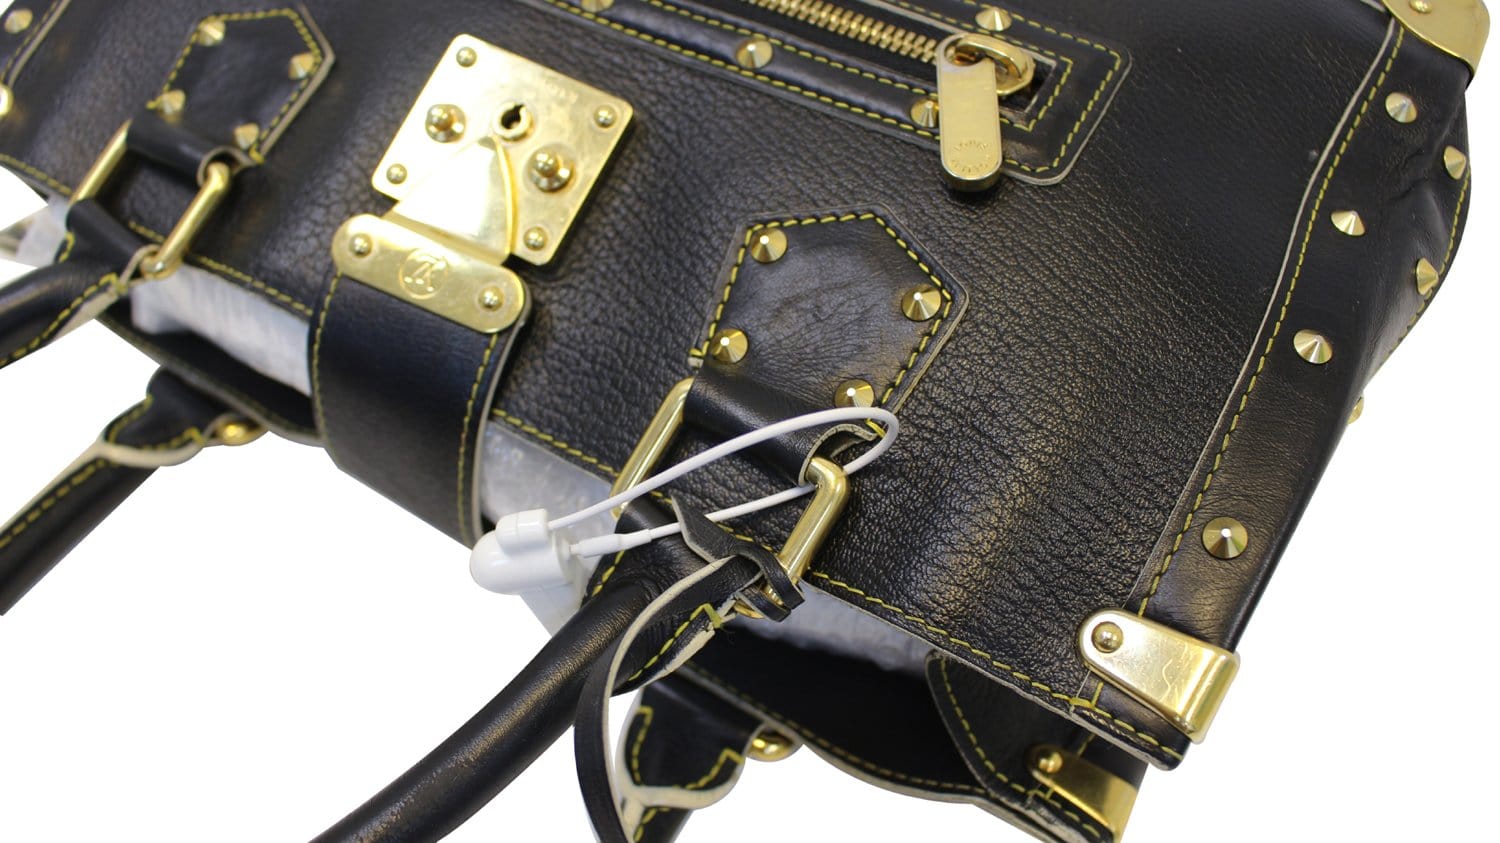 Louis Vuitton Leather Clochette, Louis Vuitton Small_Leather_Goods